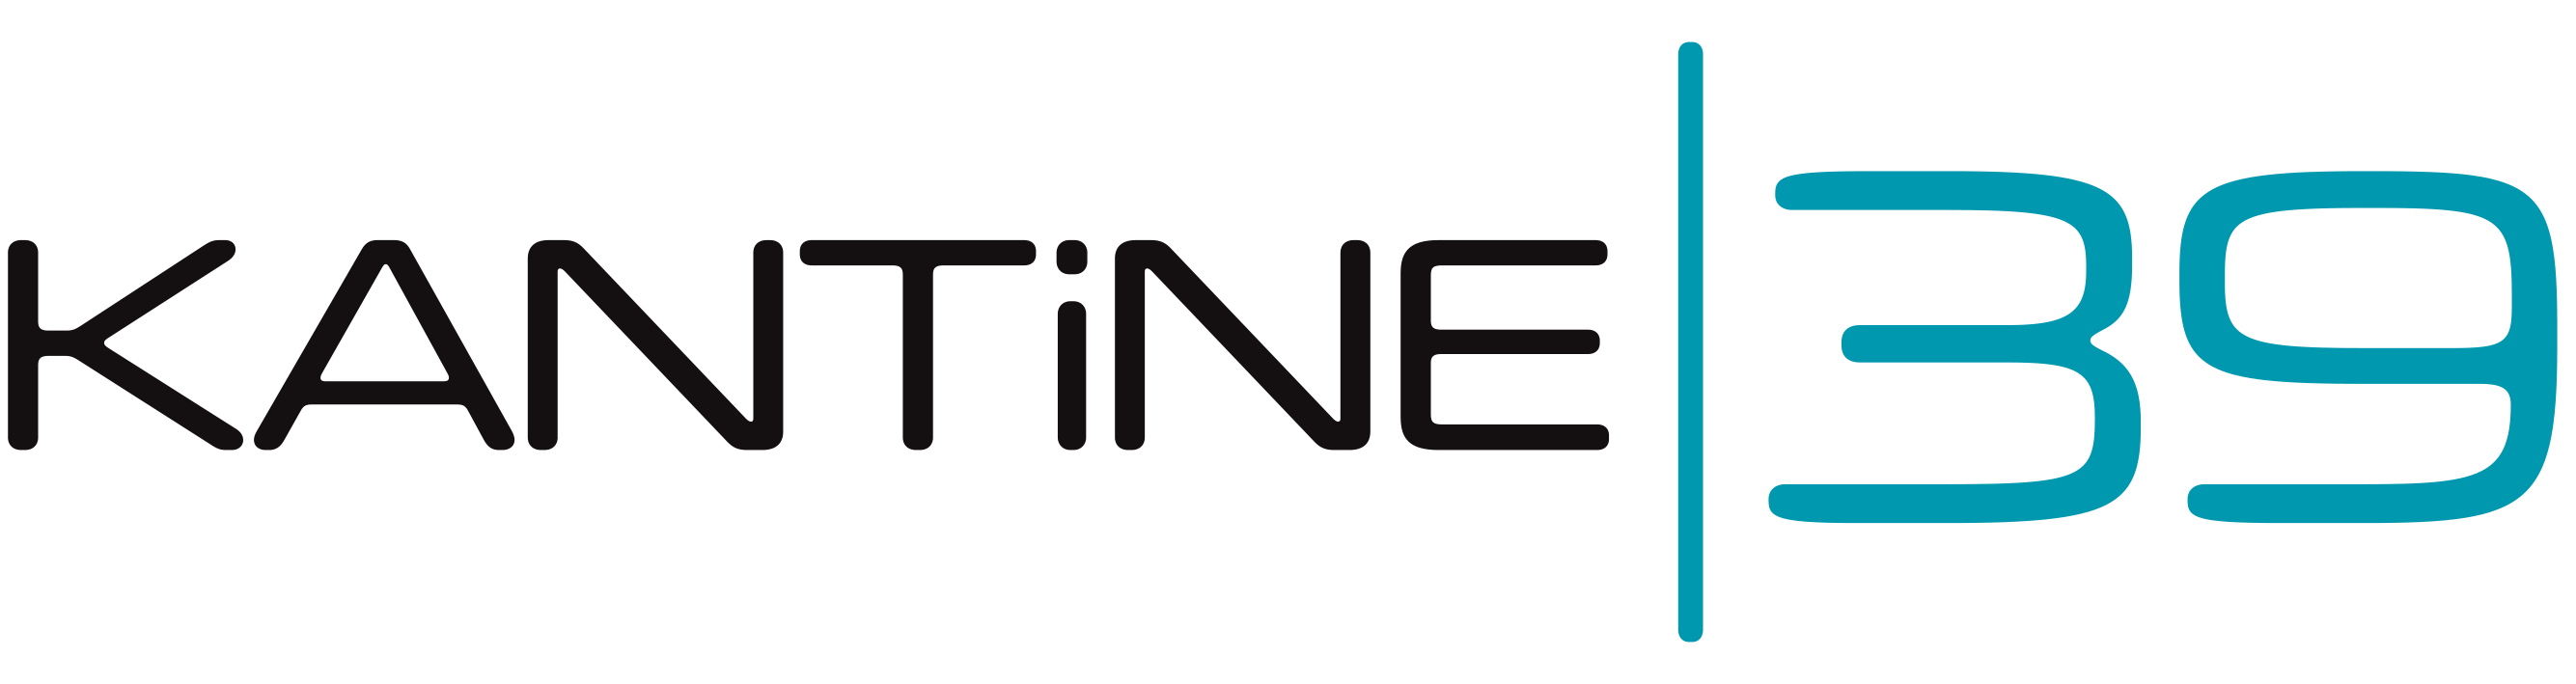 KANTINE 39 Logo Sw+tue